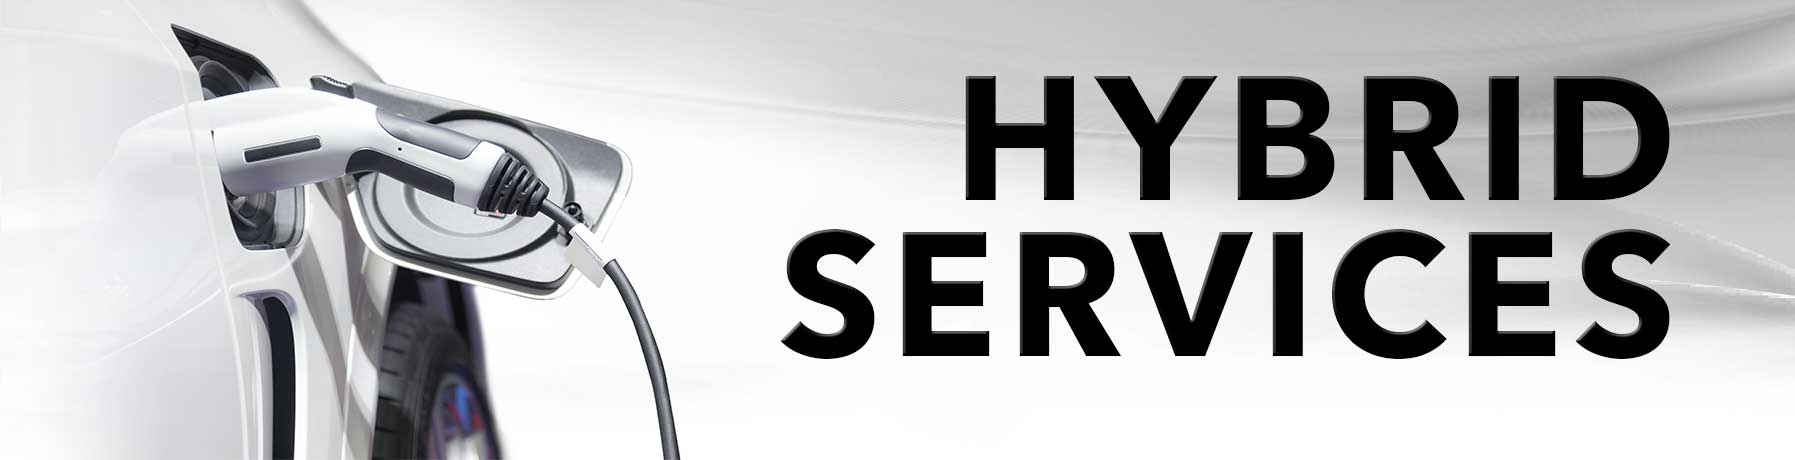 we service hybrid vehicles